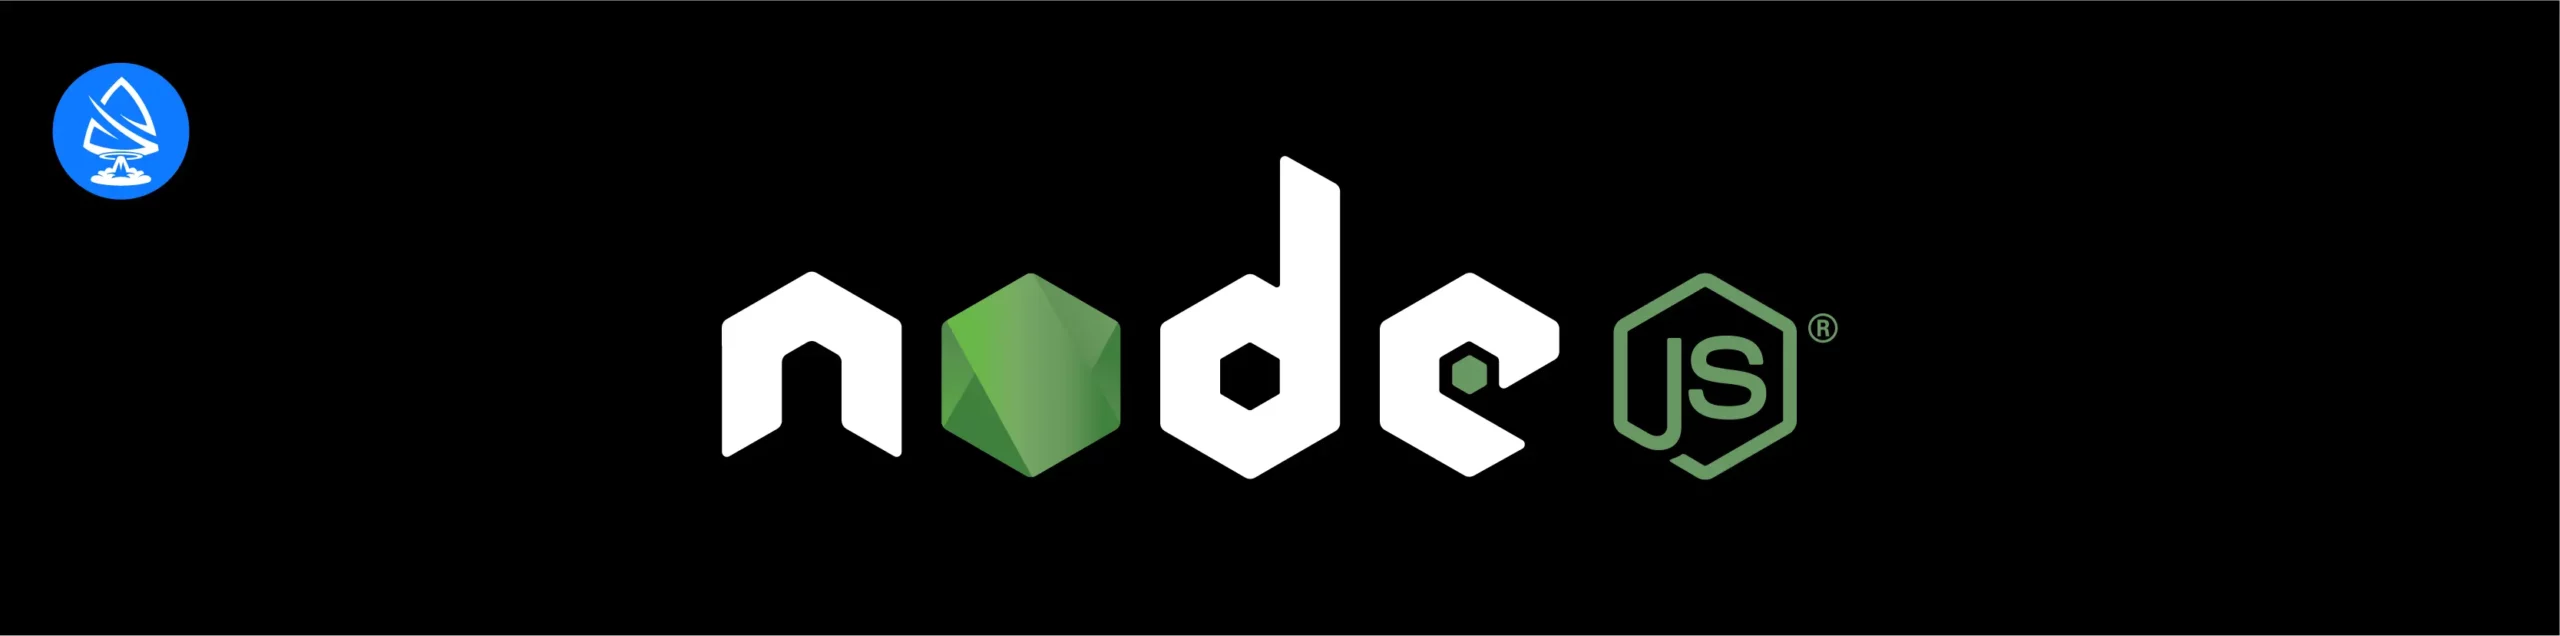 How does Node.js empower server-side JavaScript runtime? 